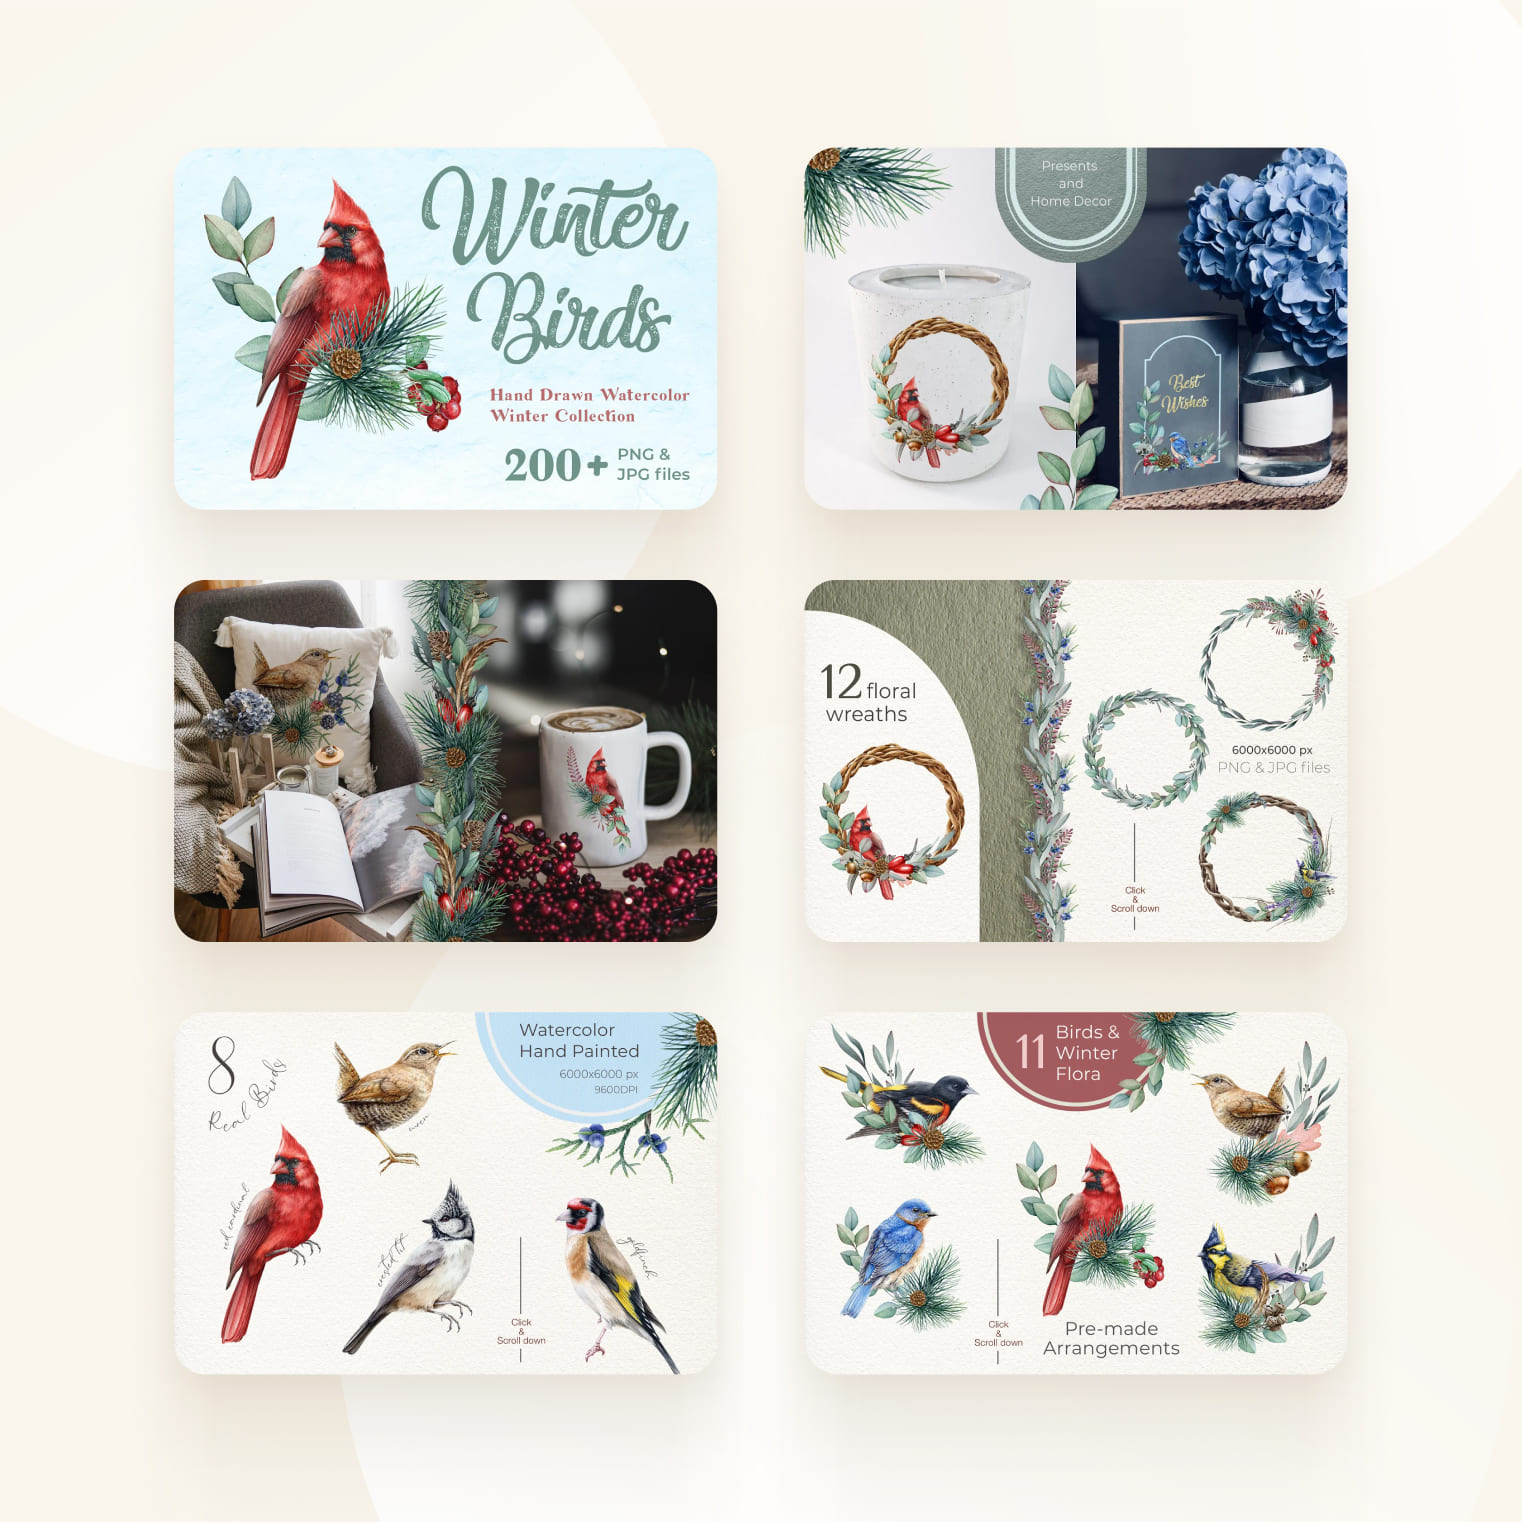 Winter Birds - Watercolor collection cover.